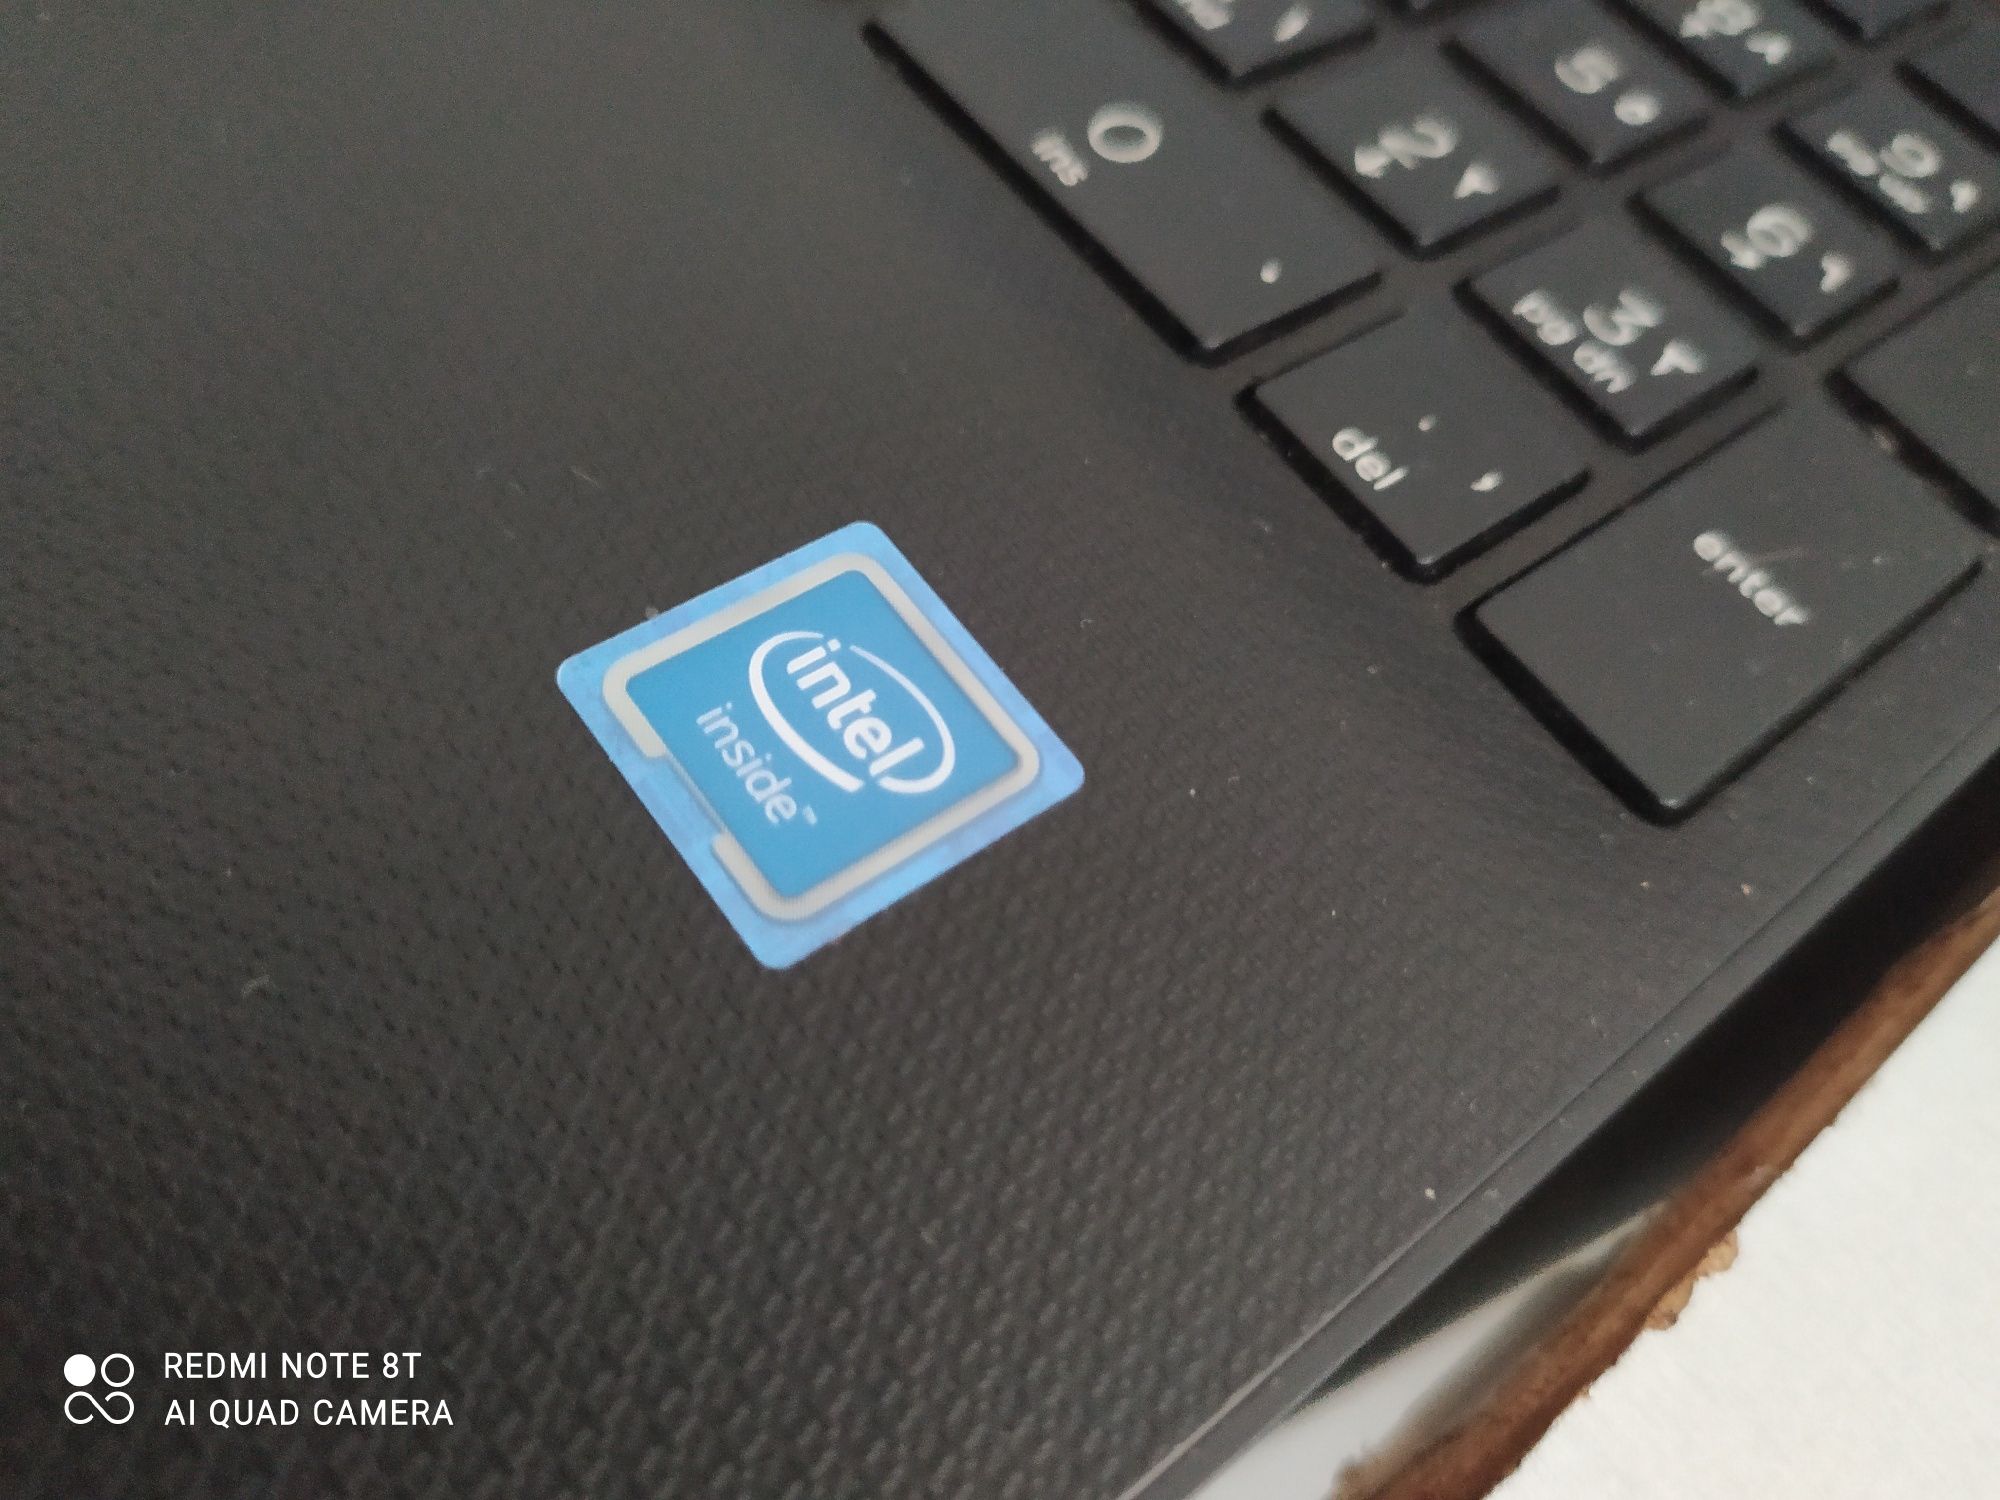 HP noutbook sotiladi Operatifka 4 GB intel insite HDD 1 TB